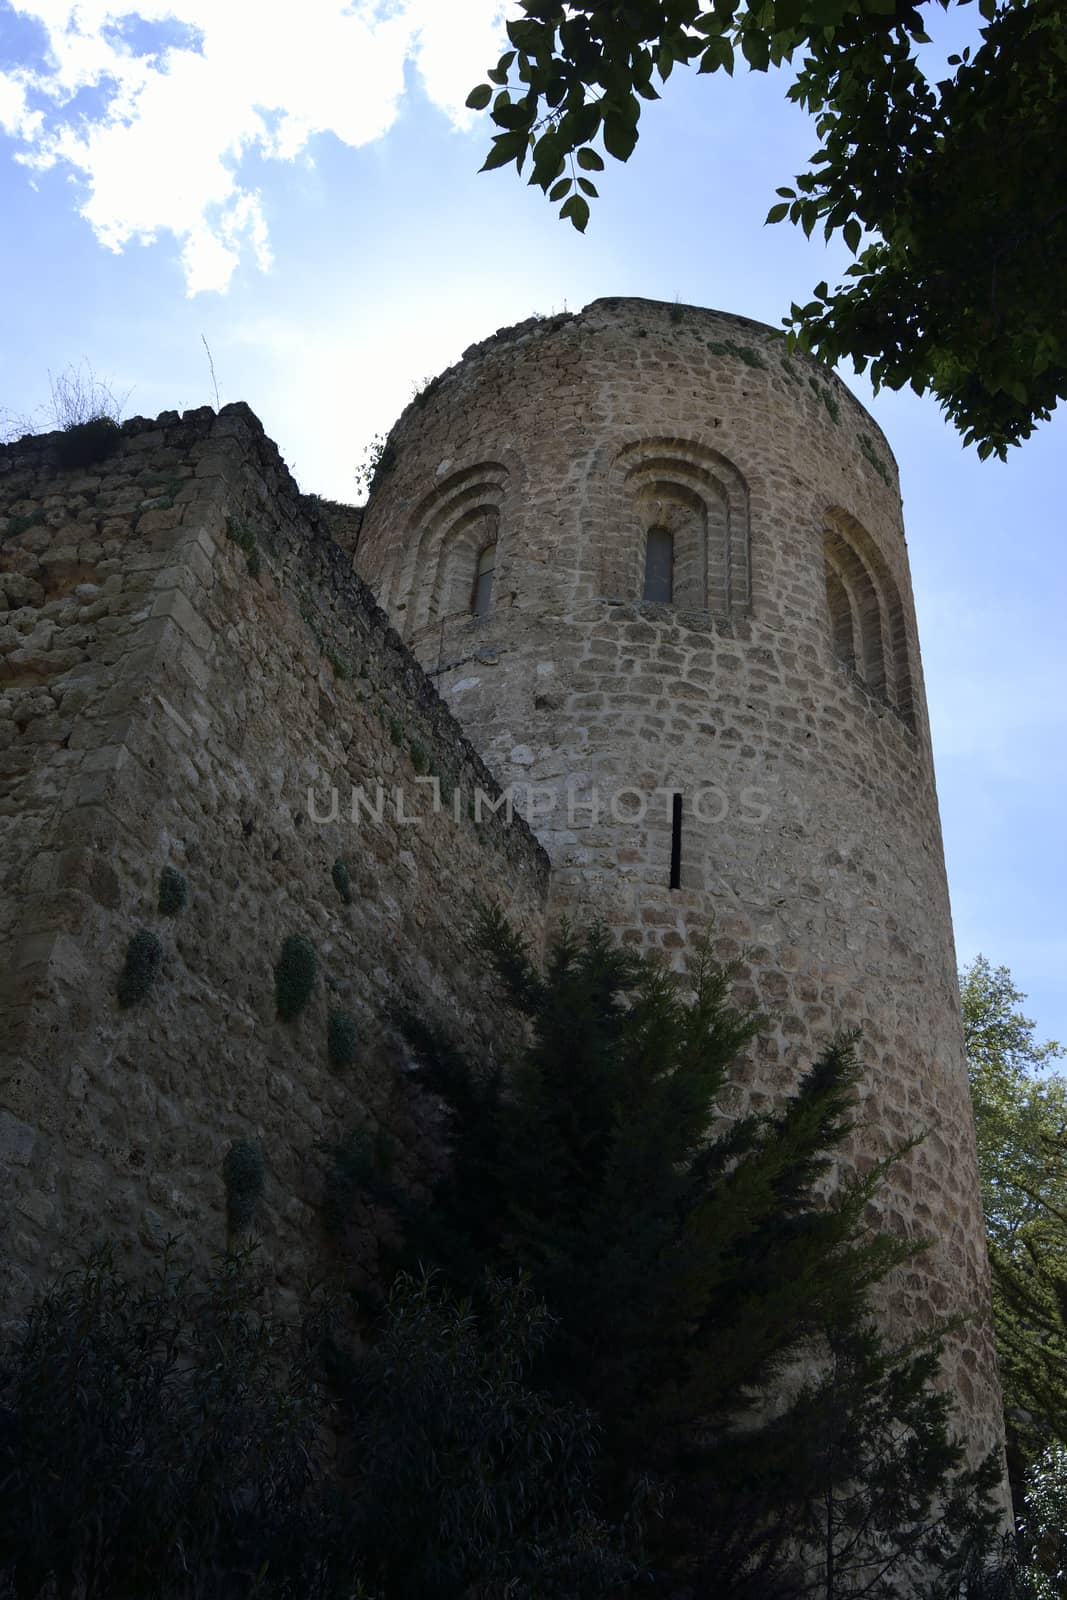 Tower of Brihuega castle, Spain. Sunny day in spring